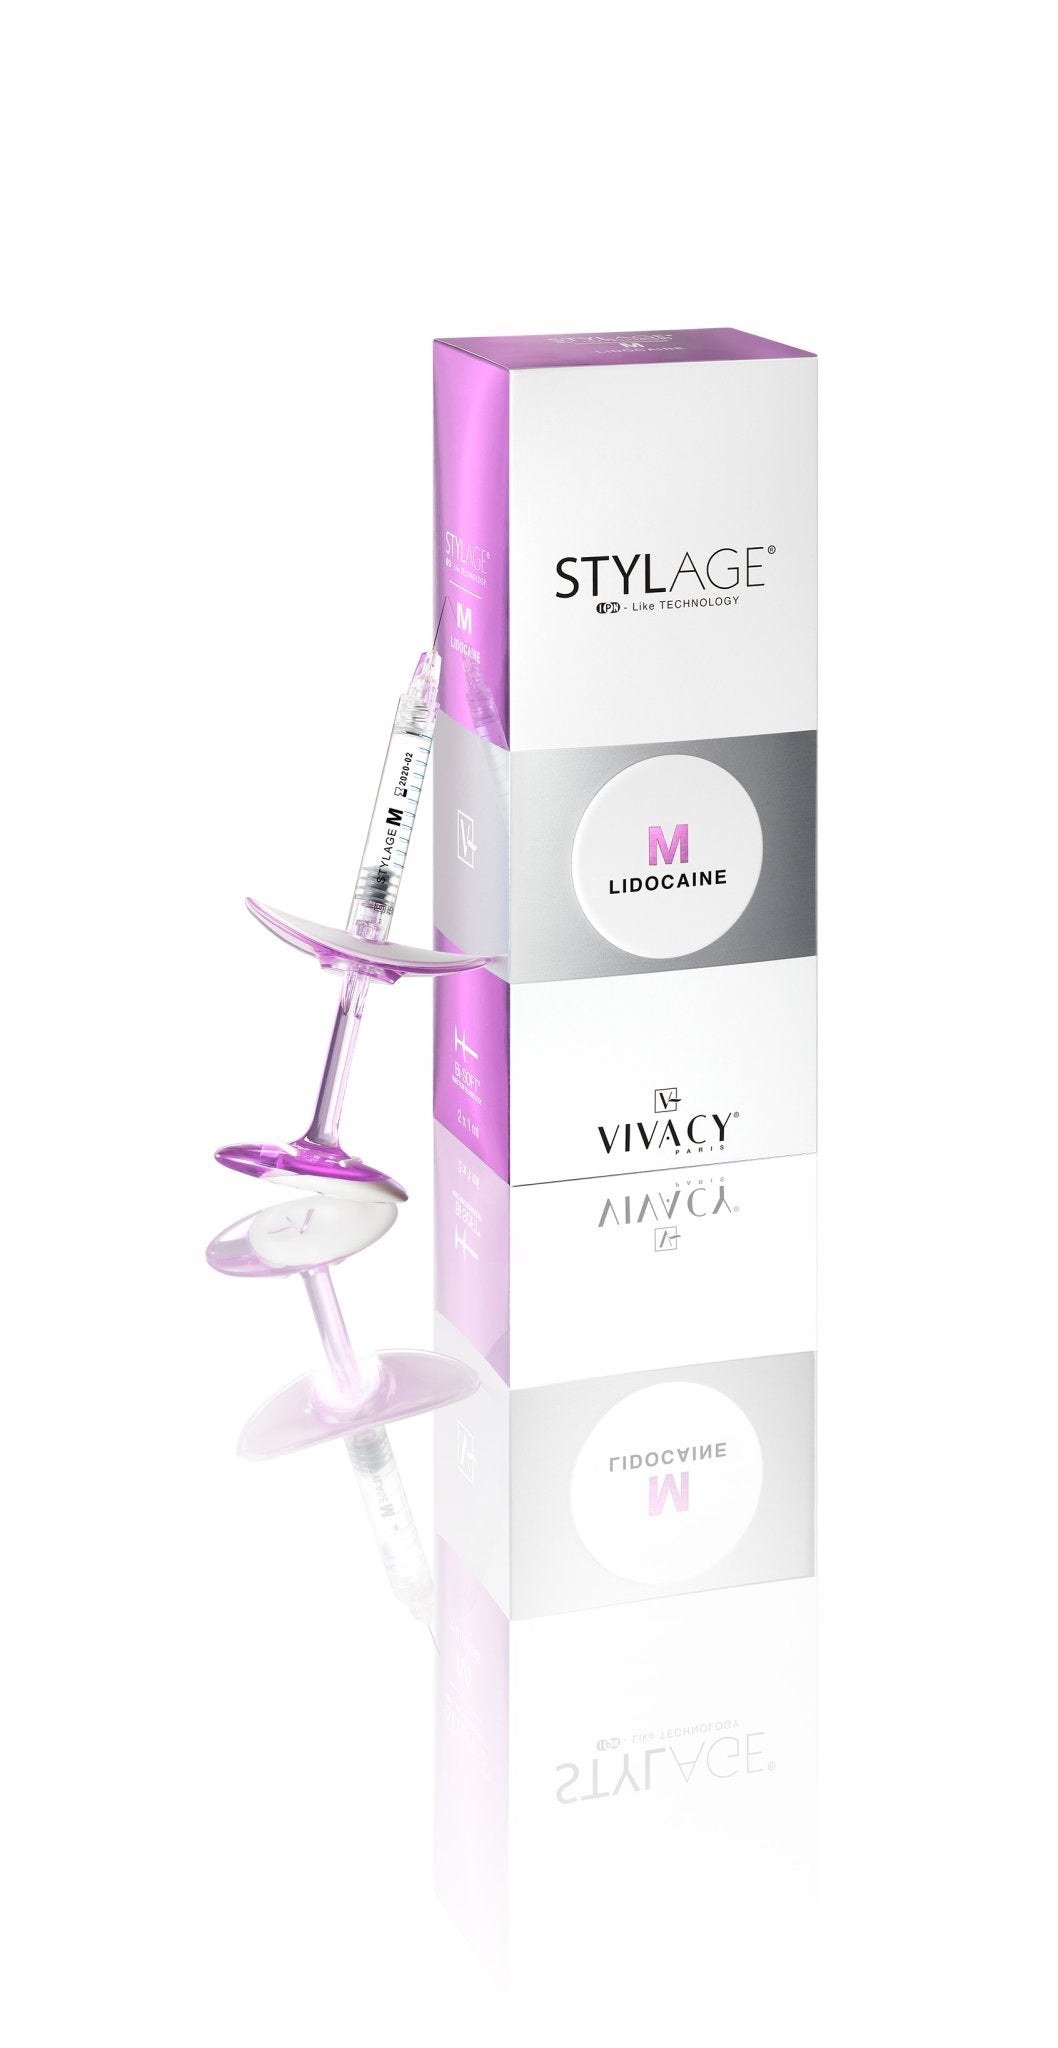 Vivacy - Stylage M Lidocaine Bi-Soft 2 x 1ml - DANYCARE